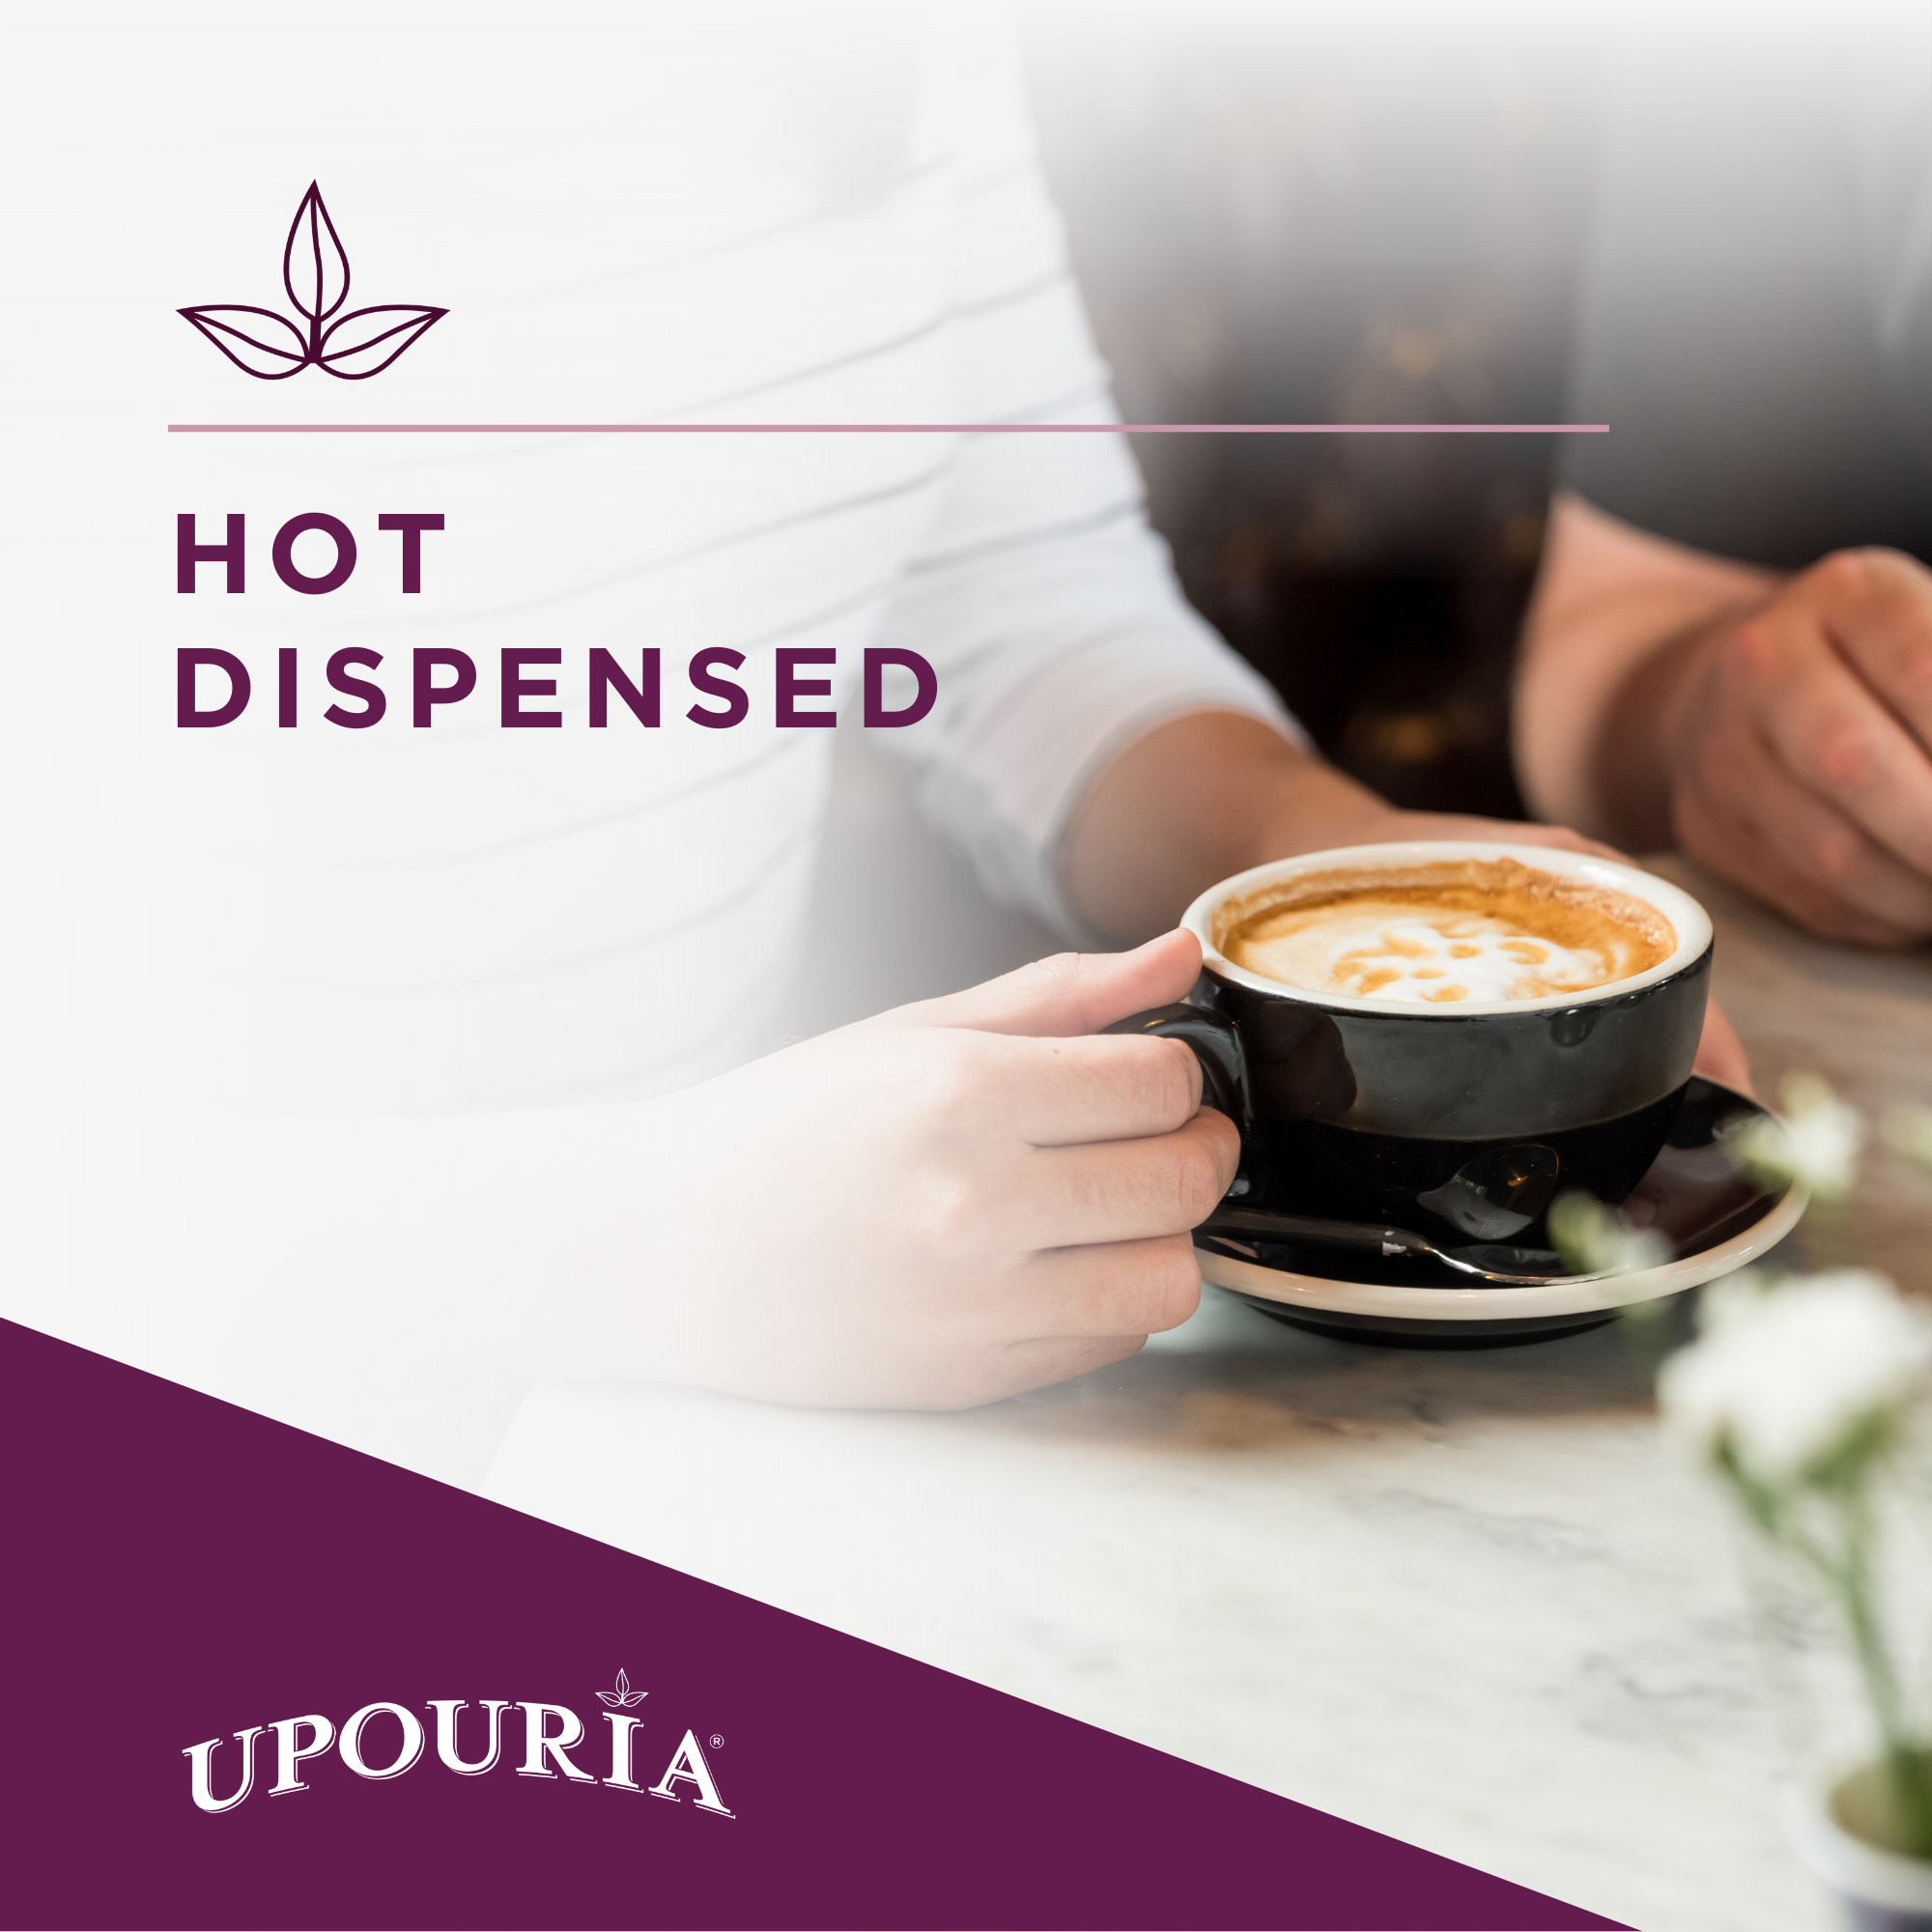 Upouria Hot Dispensed Featured Image 2022